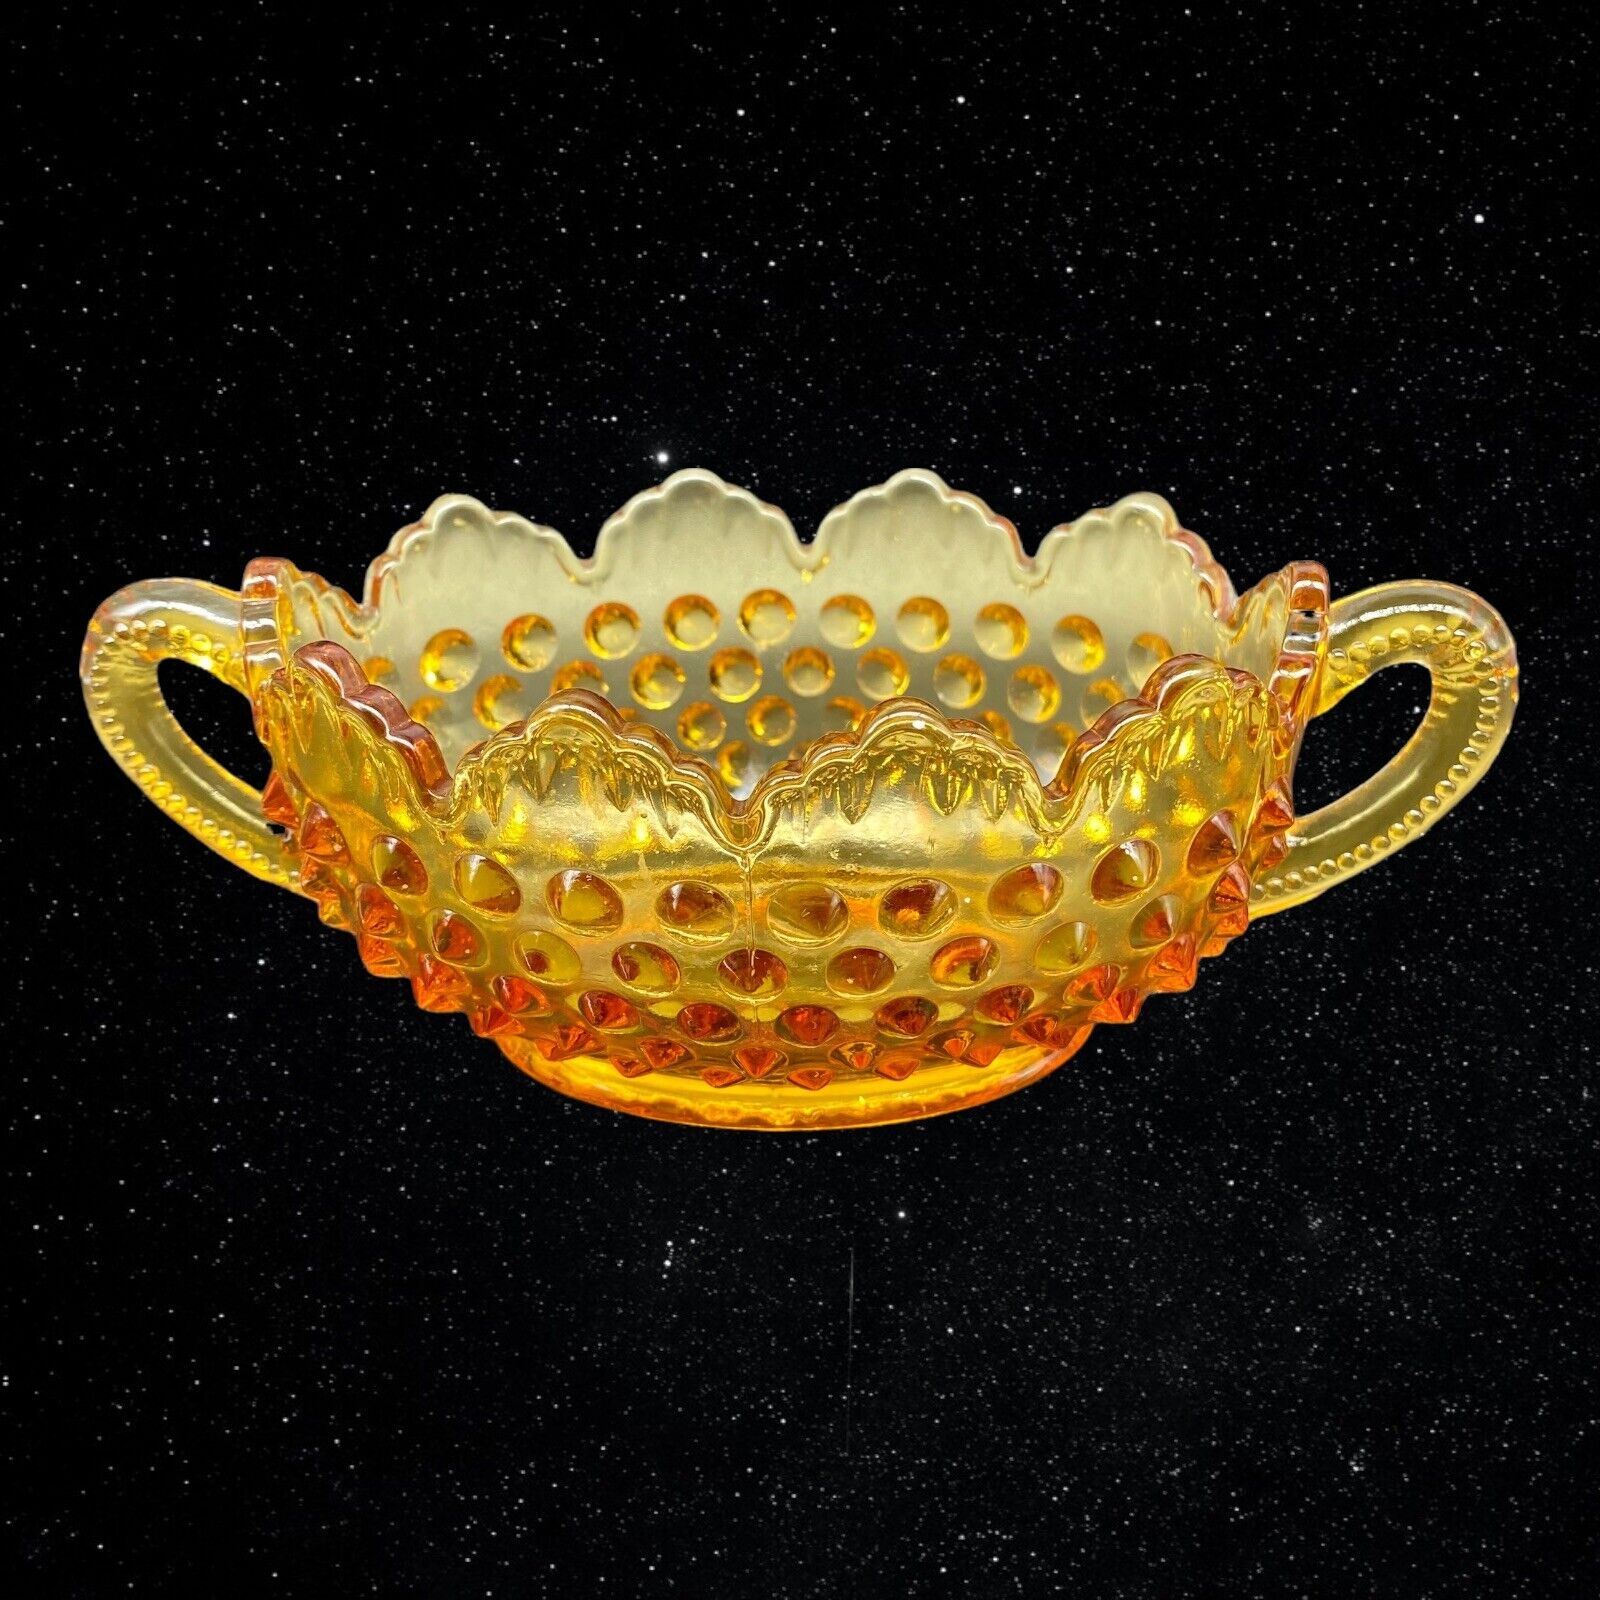 Vintage Fenton Hobnail Colonial Amber Double Handle Bowl 2”T 7”W